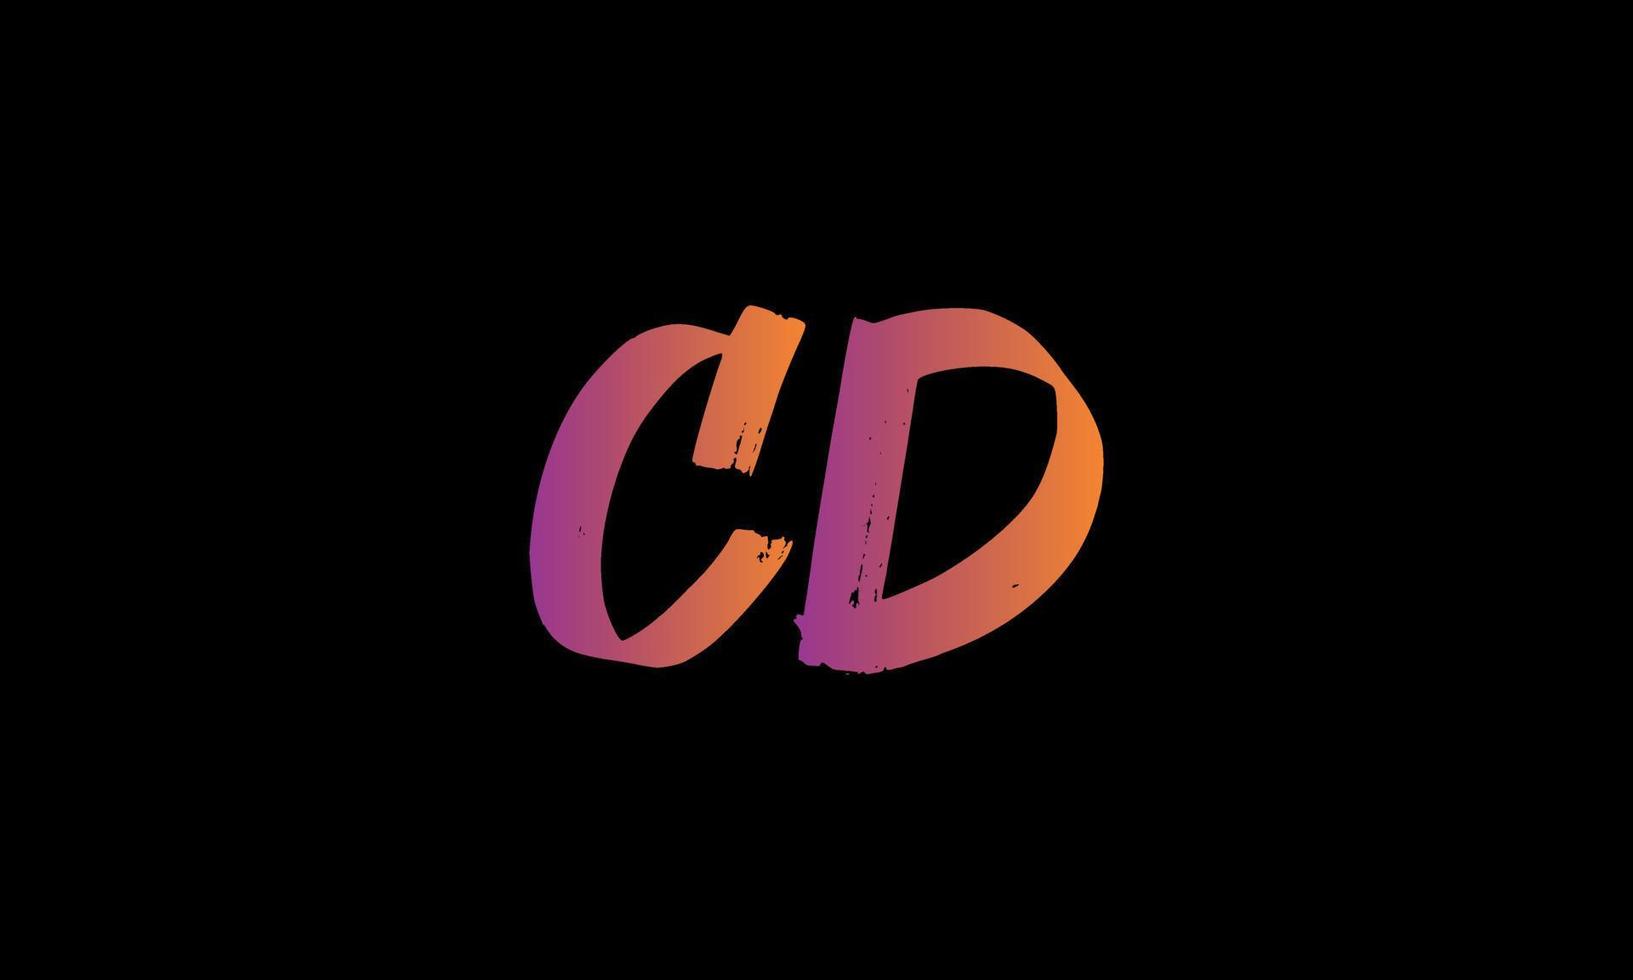 logotipo de cd de letra inicial. plantilla de vector libre de diseño de logotipo de carta de stock de cepillo de cd.